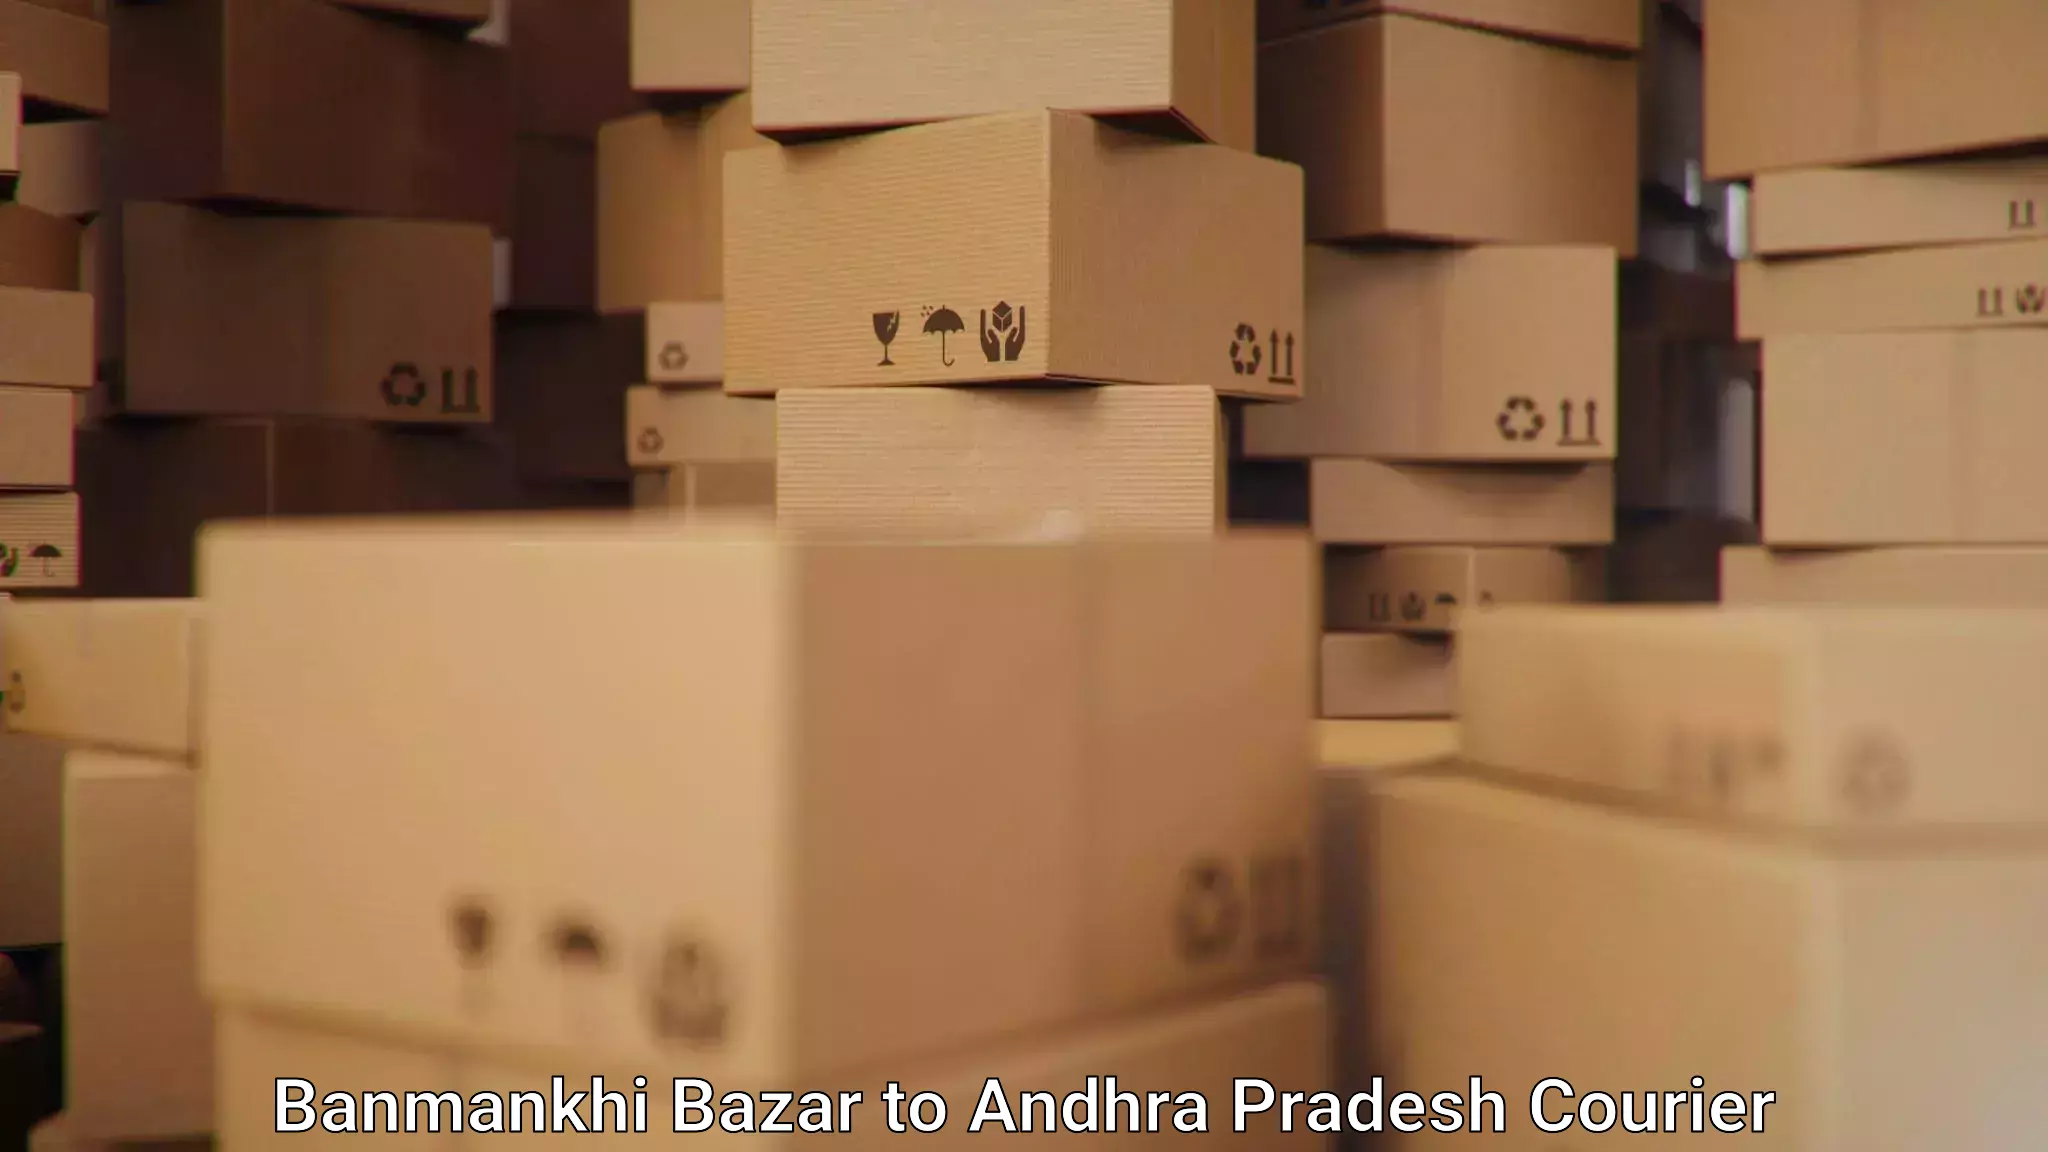 Courier service partnerships Banmankhi Bazar to Andhra Pradesh